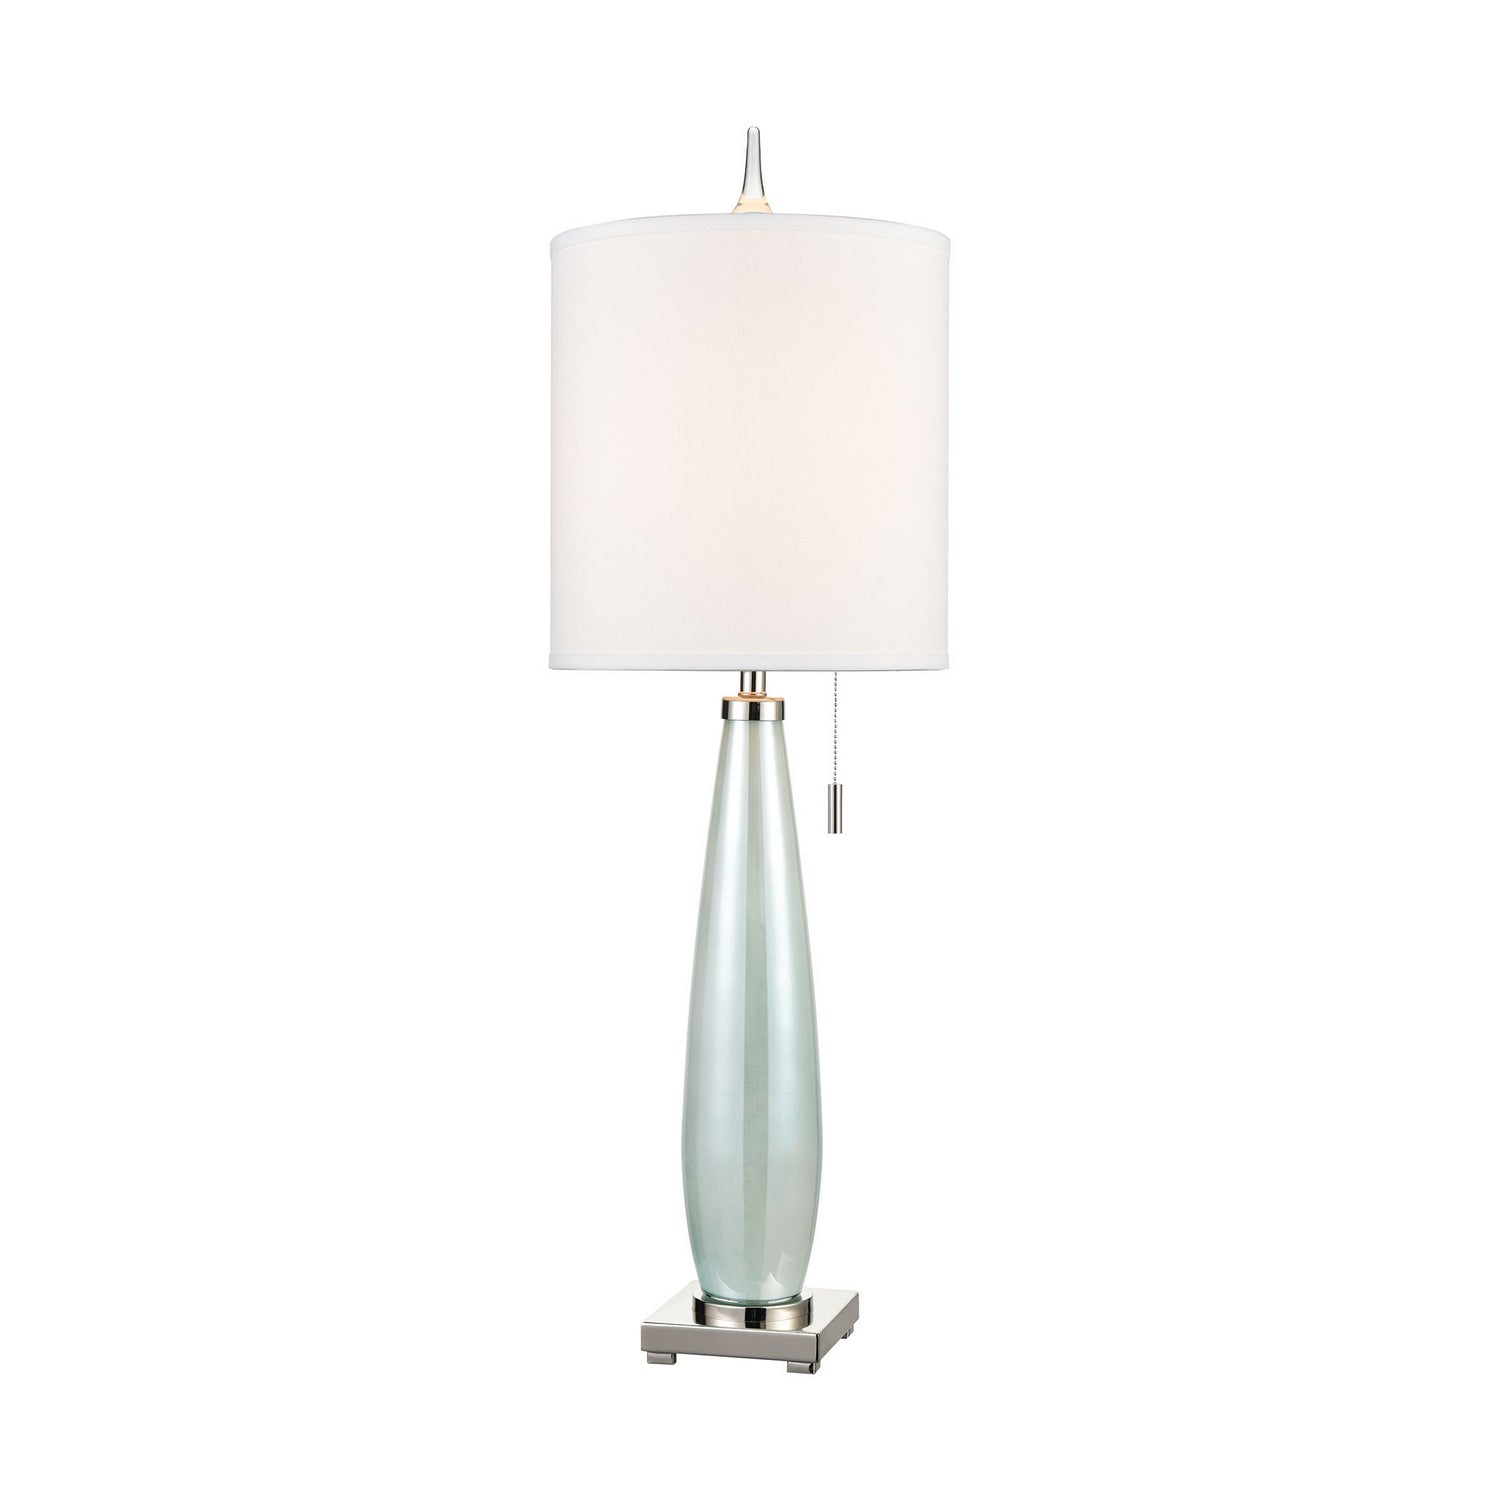 ELK Home - D4517 - One Light Table Lamp - Confection - Seafoam Green